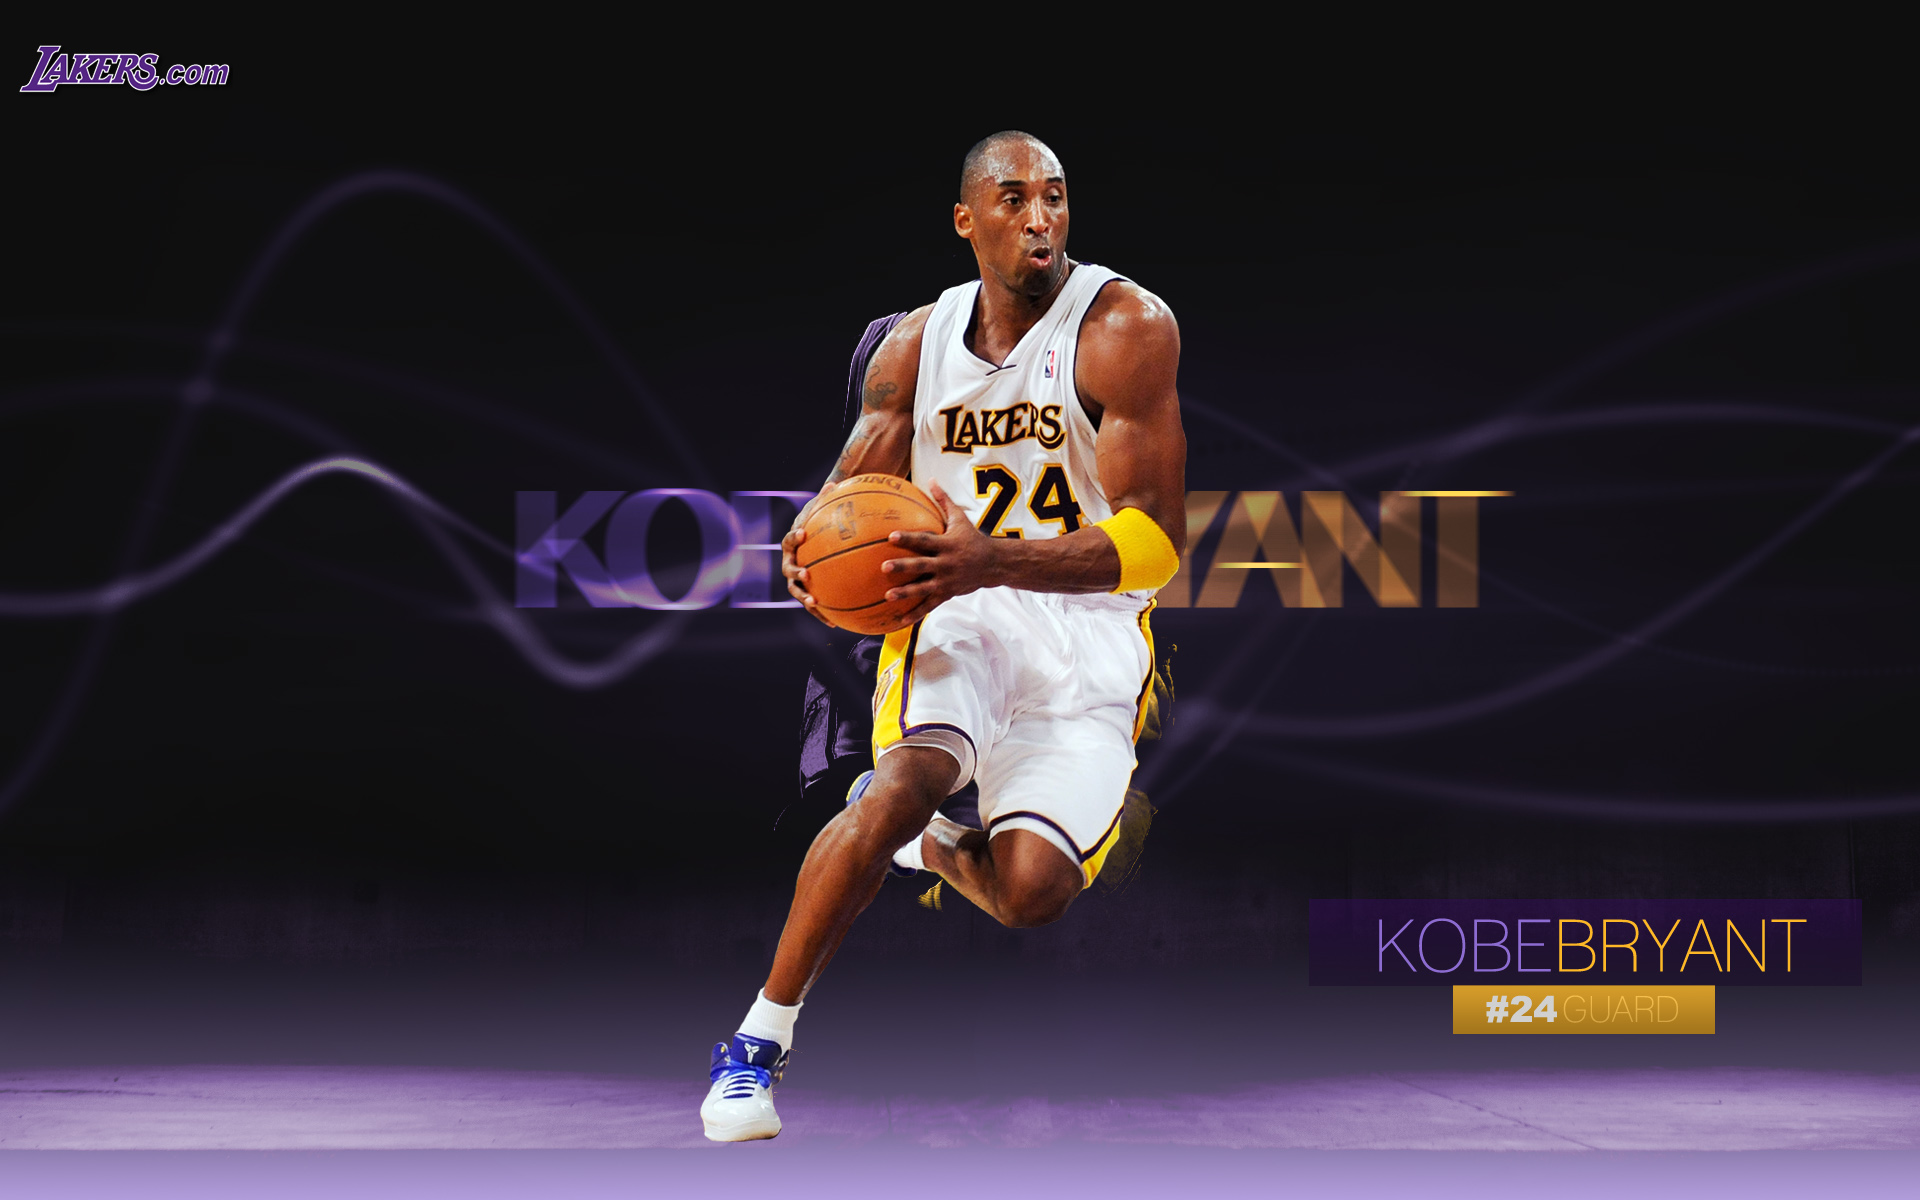 Lakers Desktop Wallpaper The Official Site Of Los